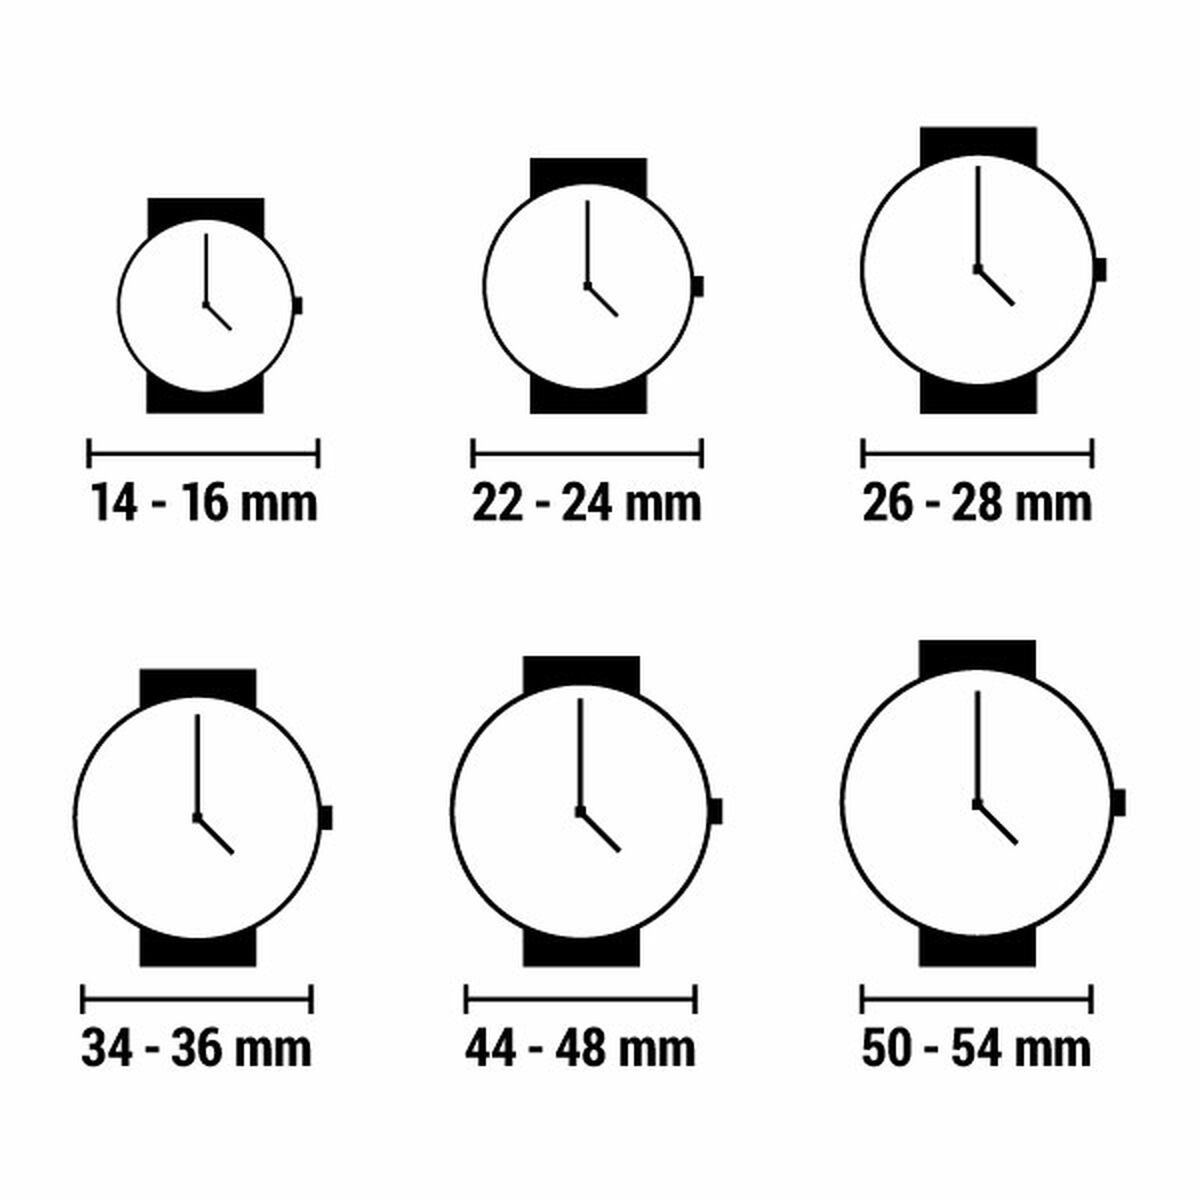 Horloge Dames GC Watches (Ø 38 mm)